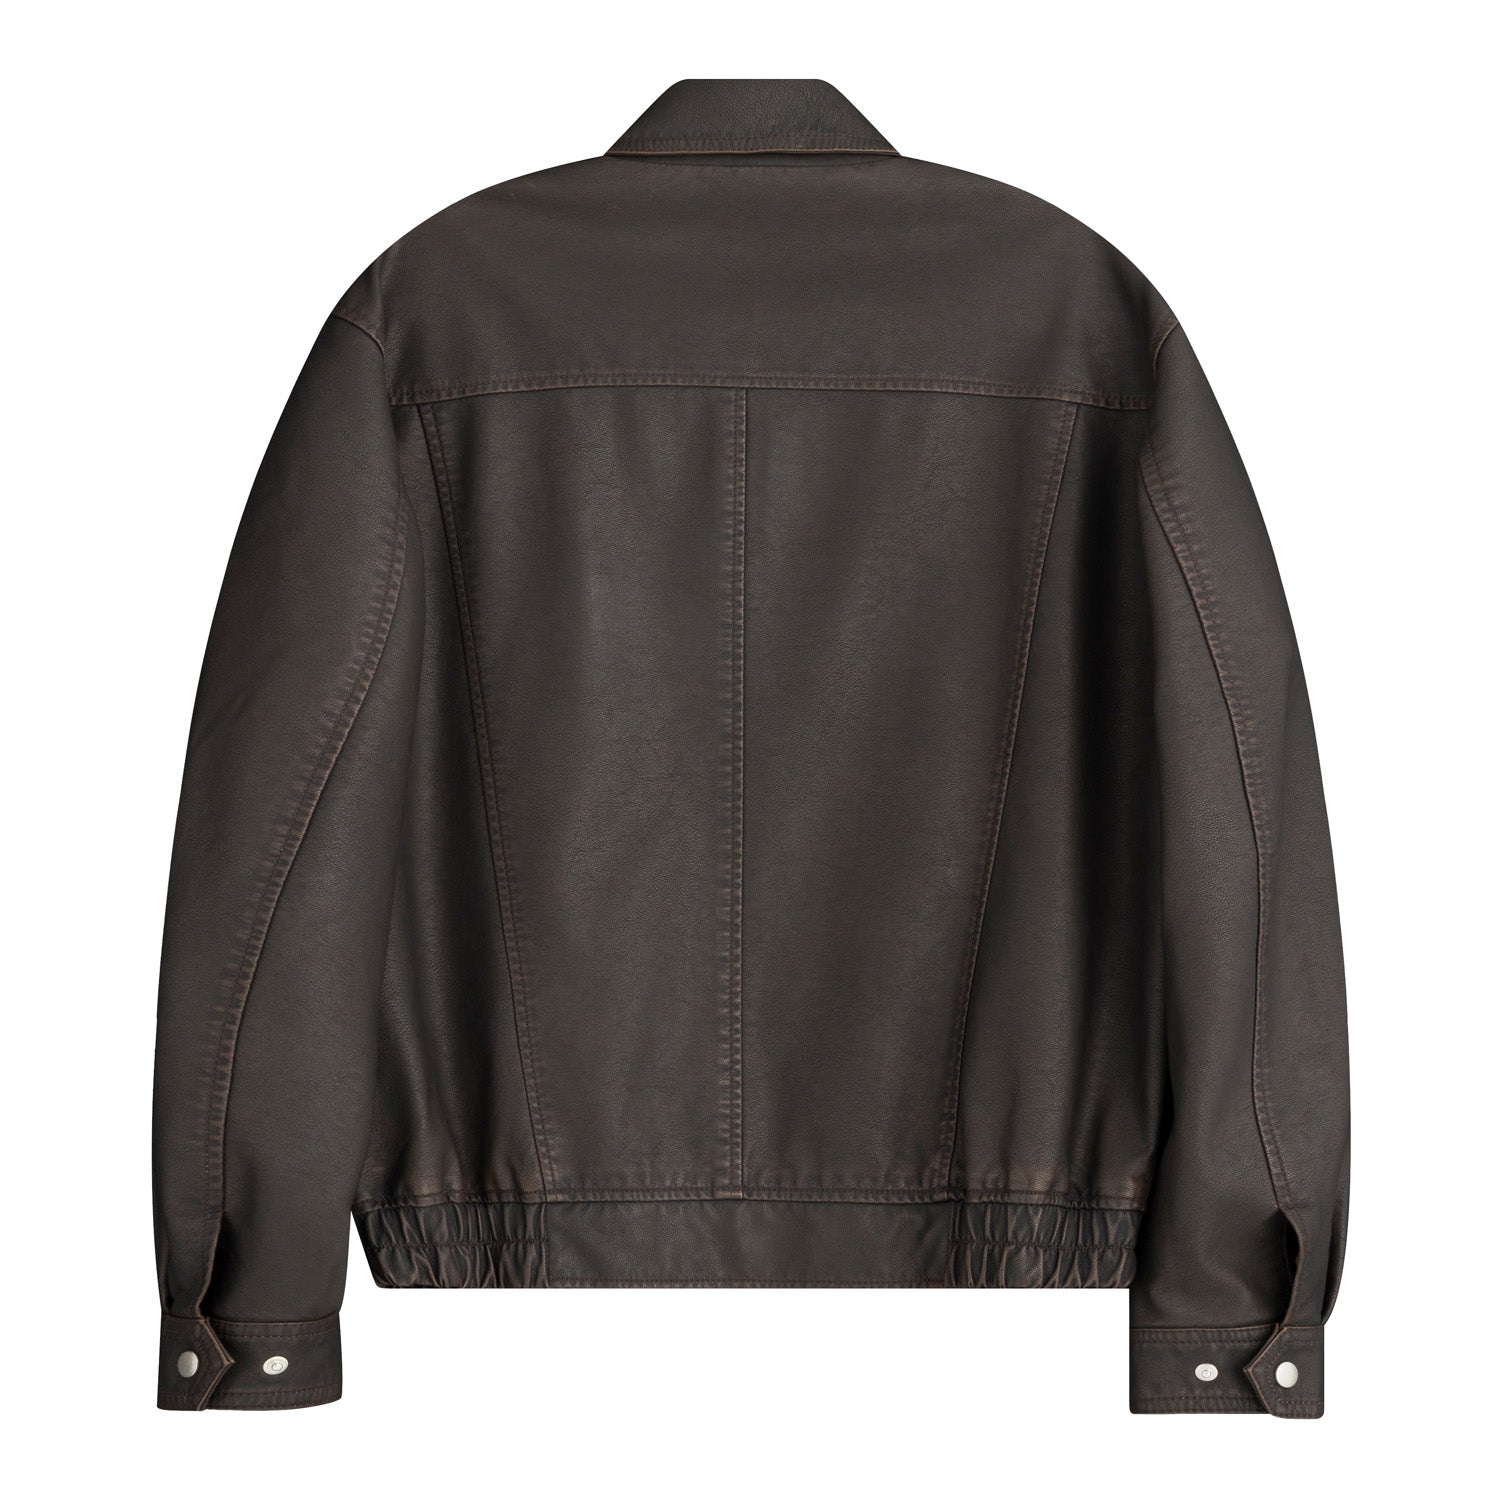 Overfit Washed Heritage Jacket (Brown)